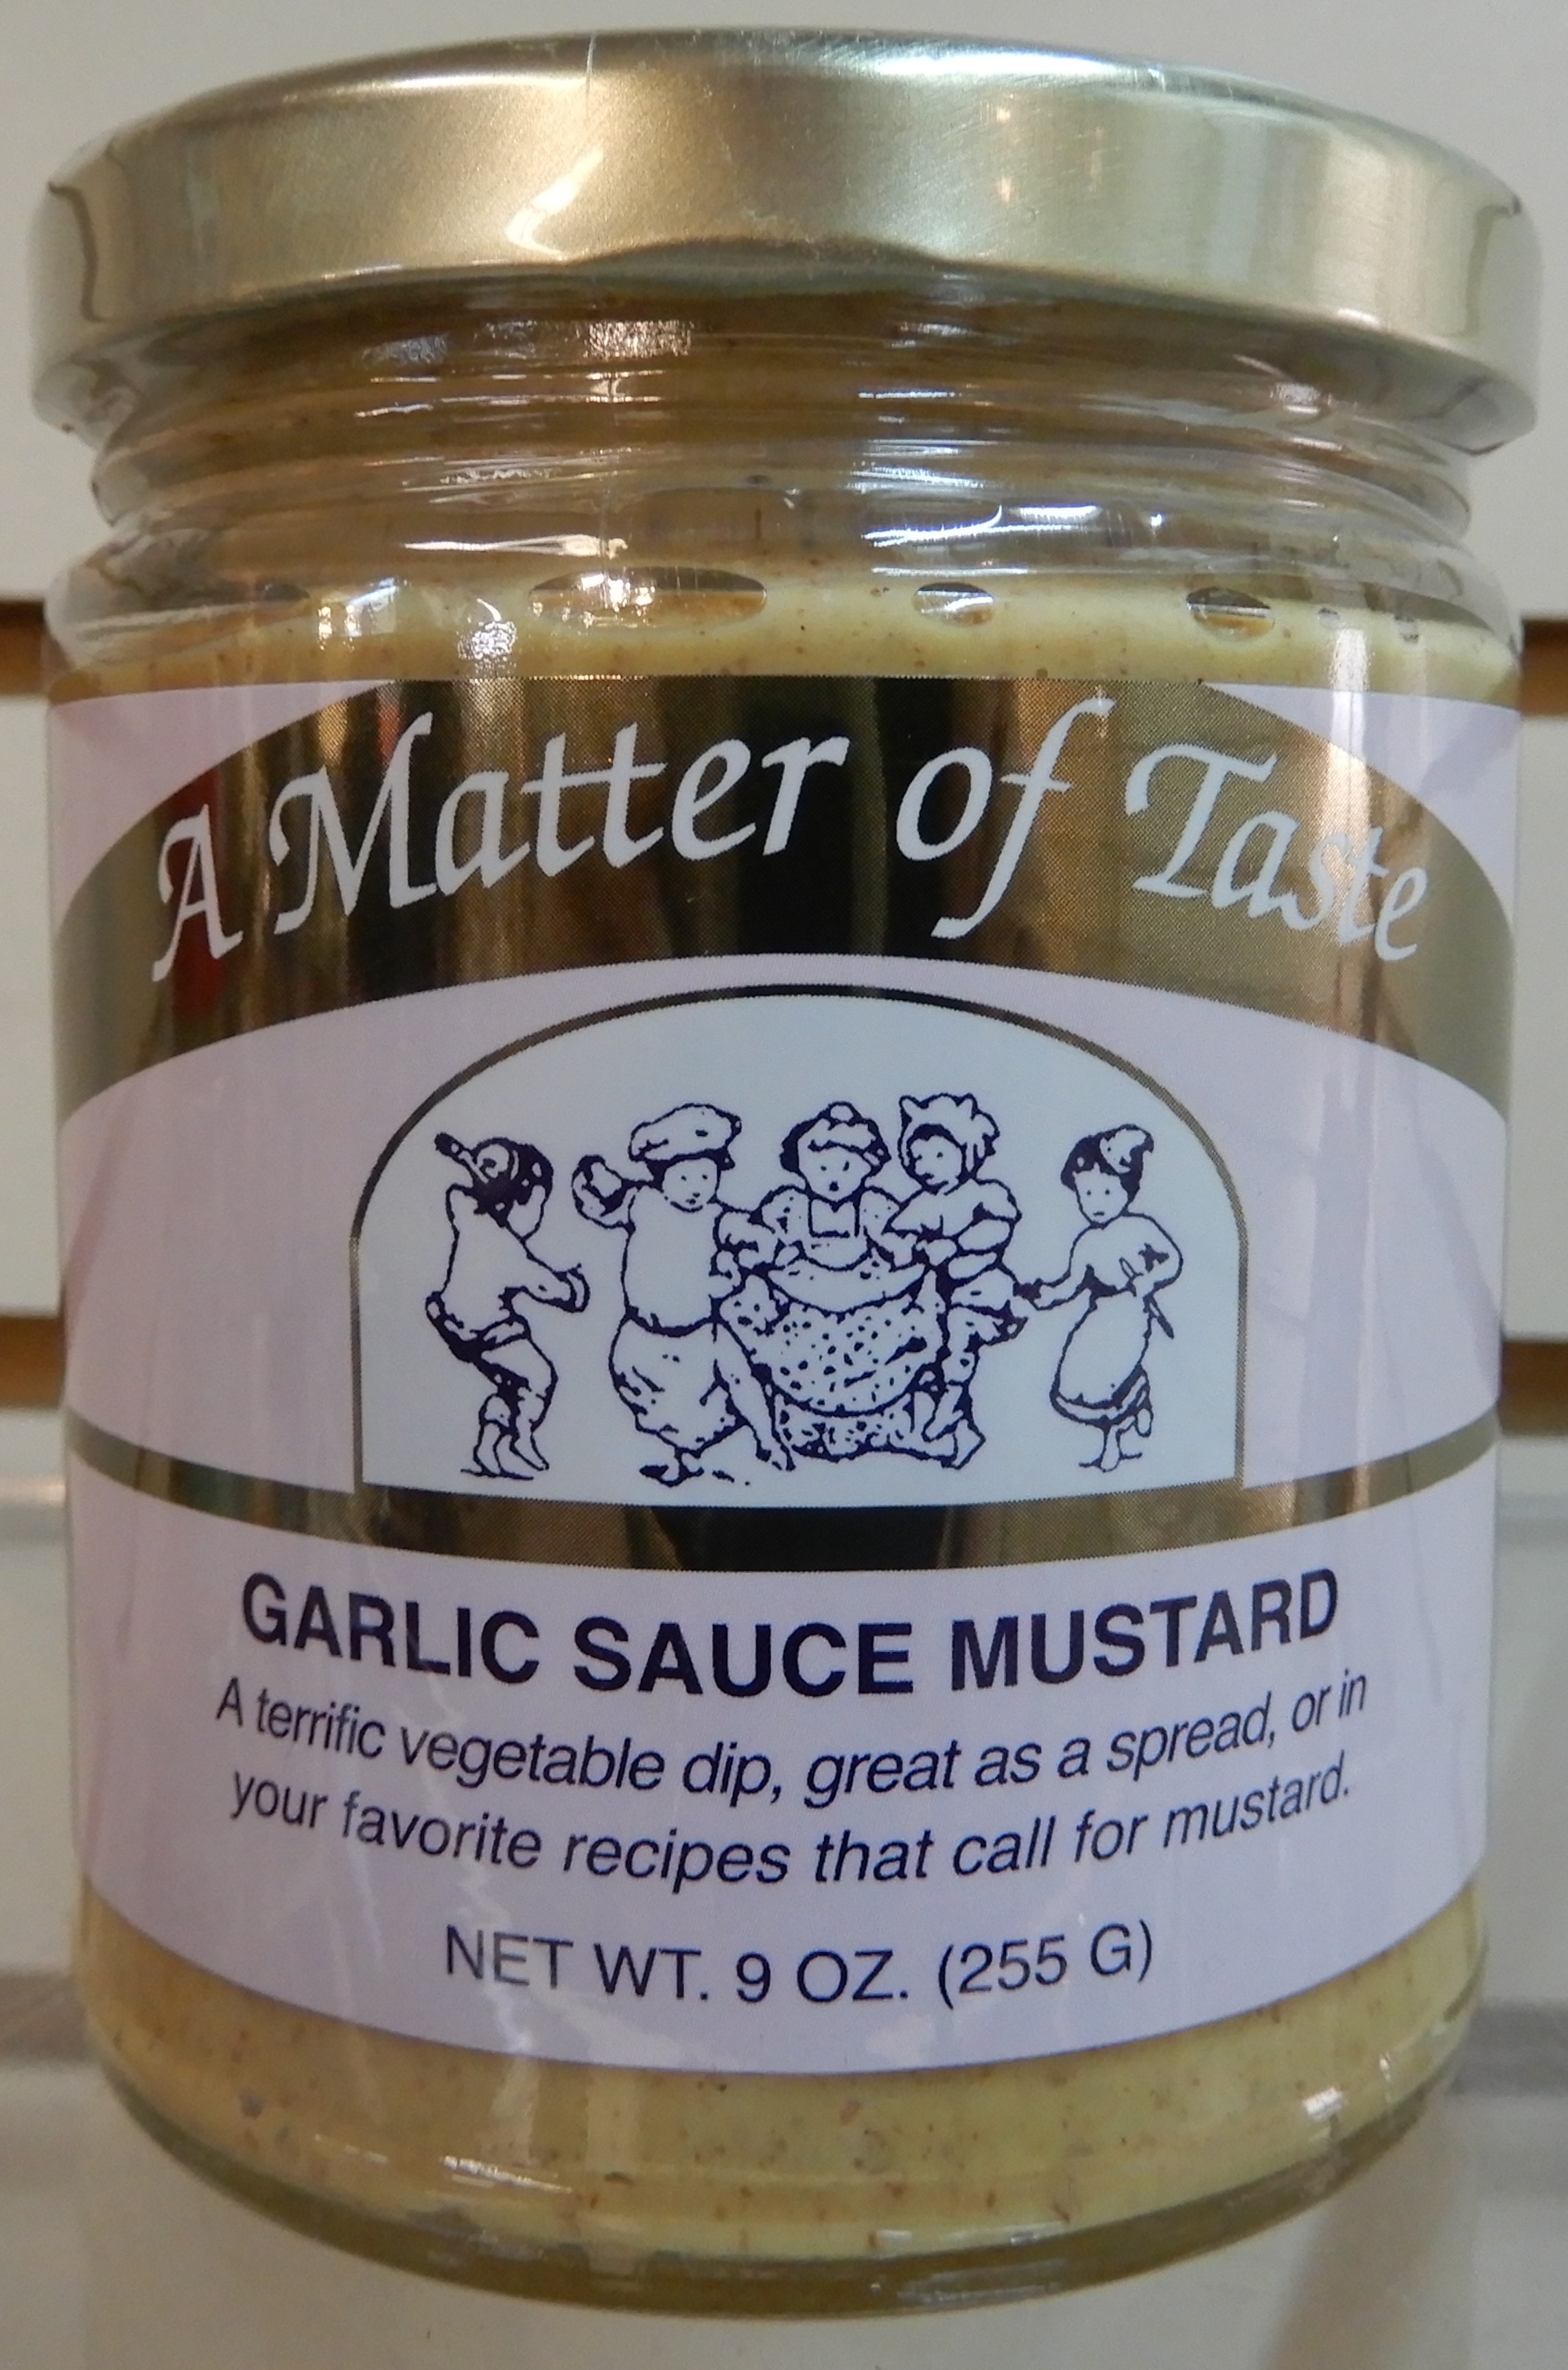 Garlic Sauce Mustard